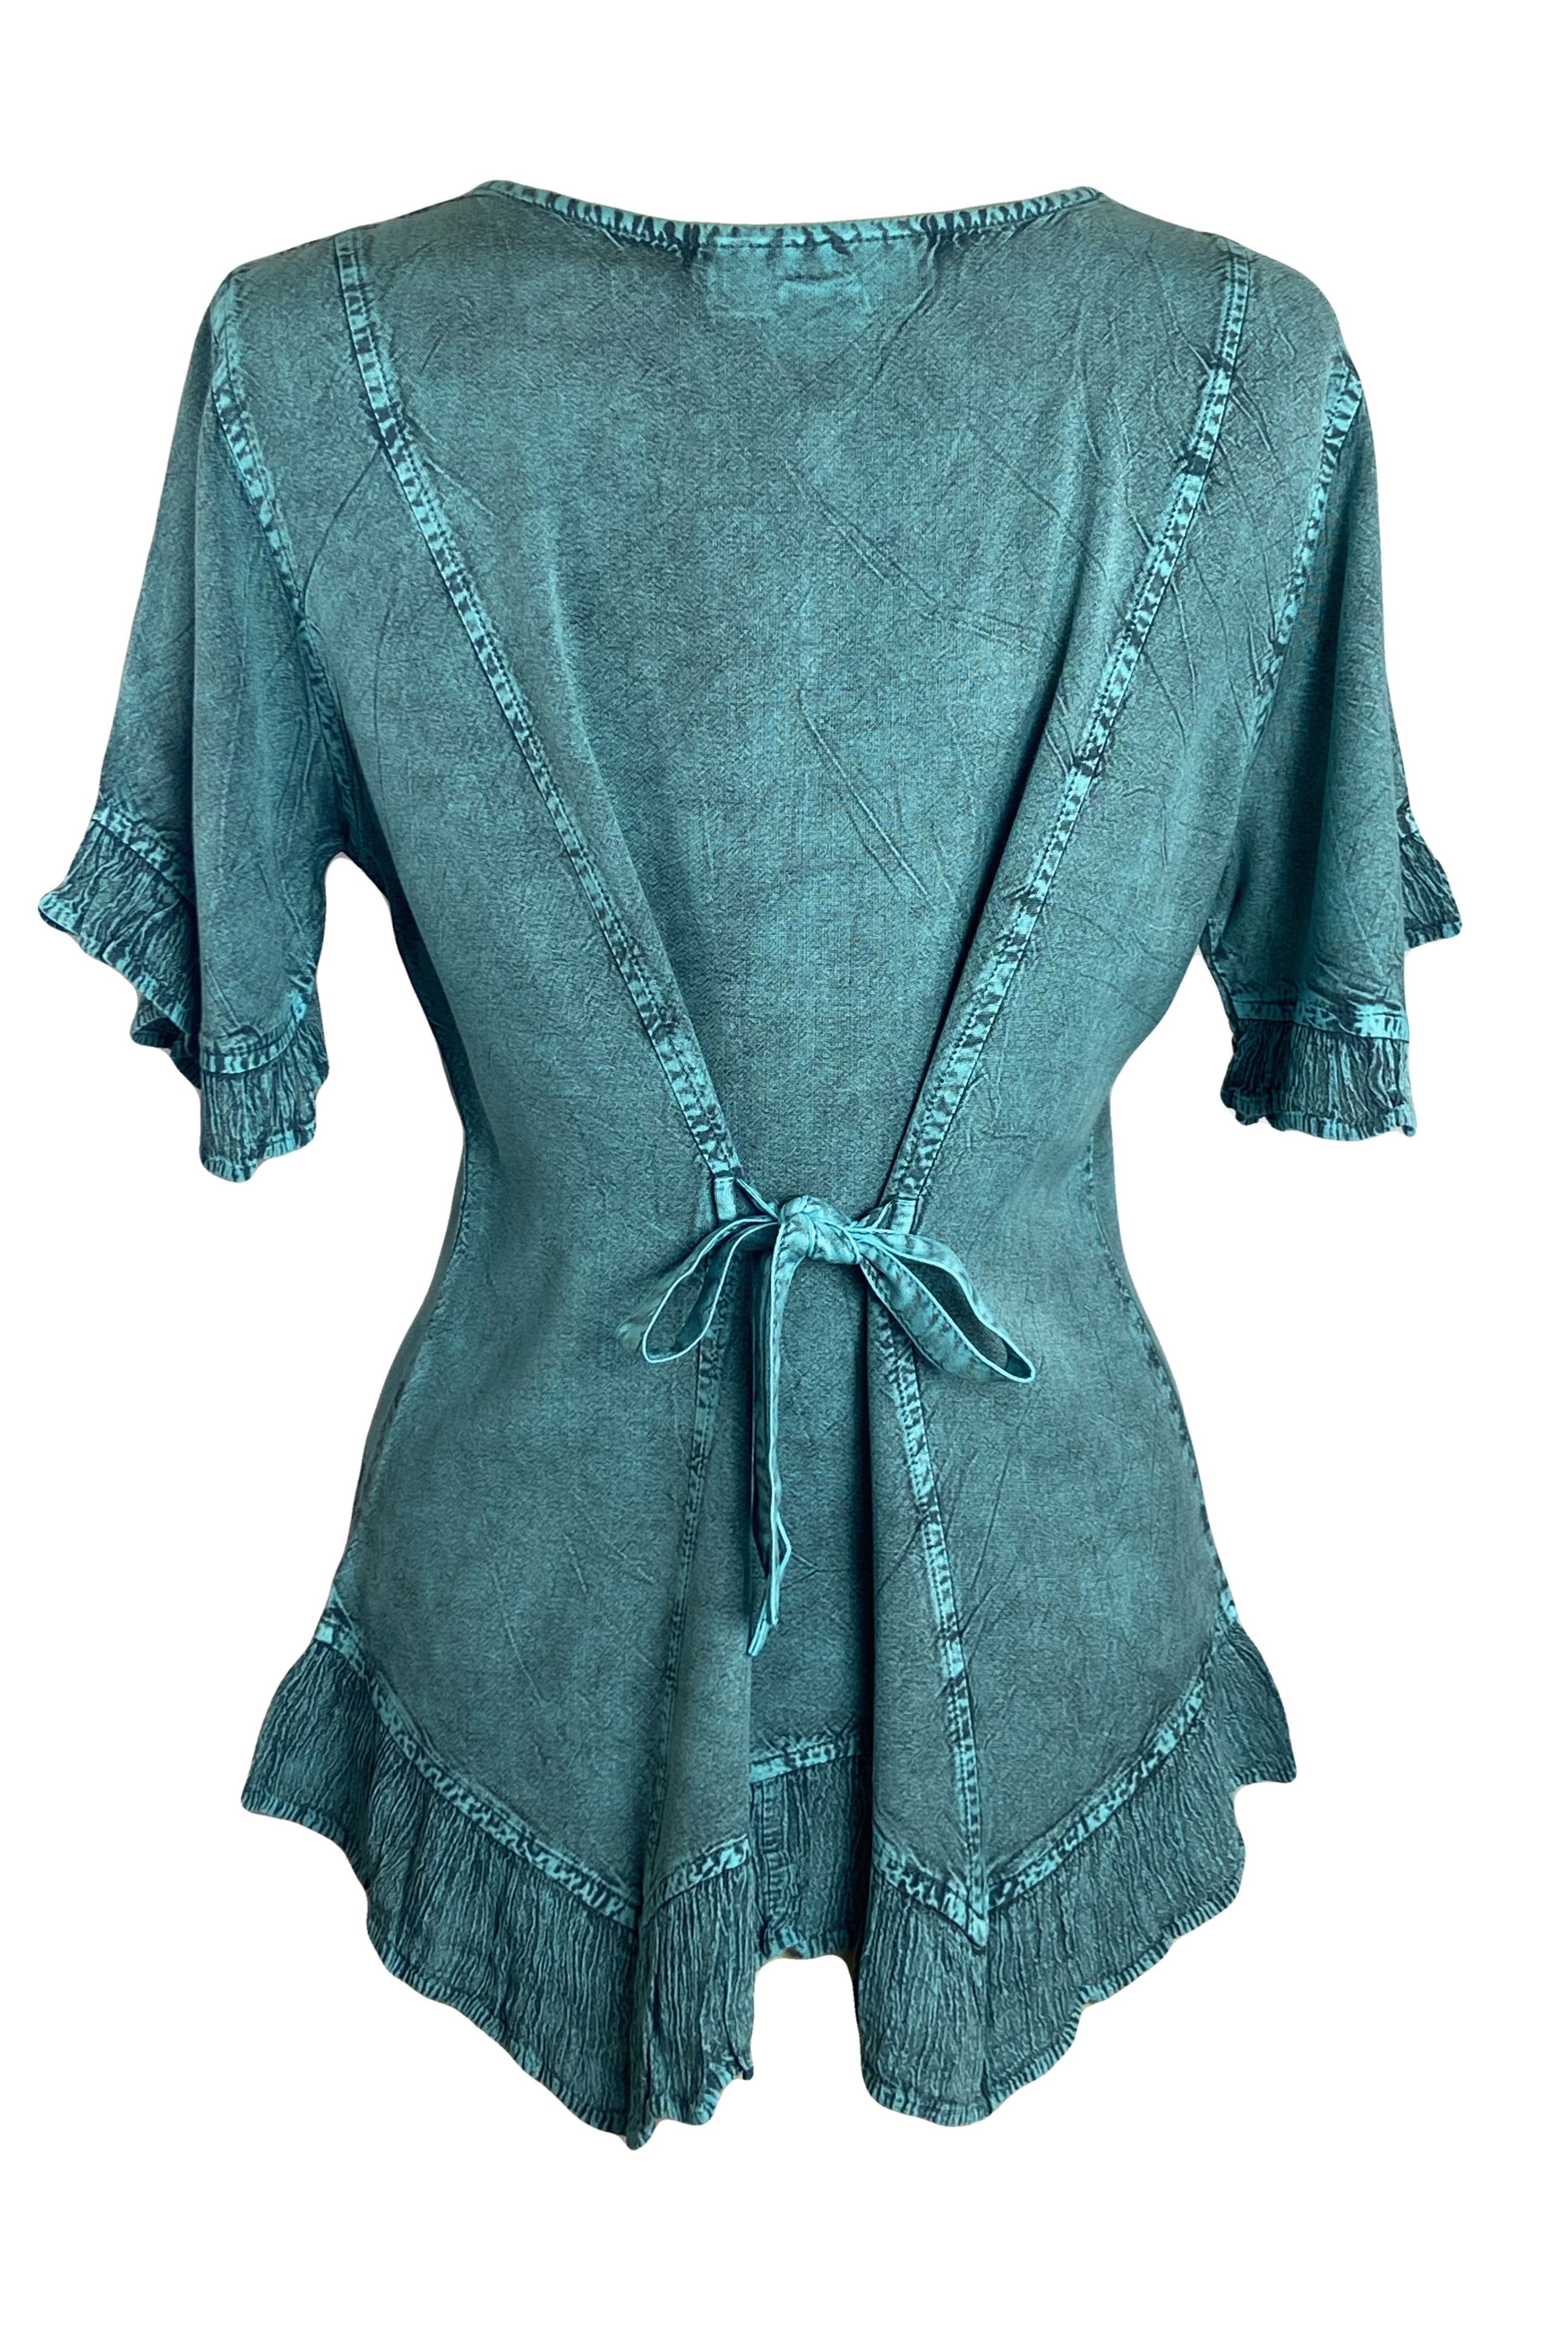 305 B Medieval Bohemian Embroidered Bottom Shirt Blouse – Agan Traders